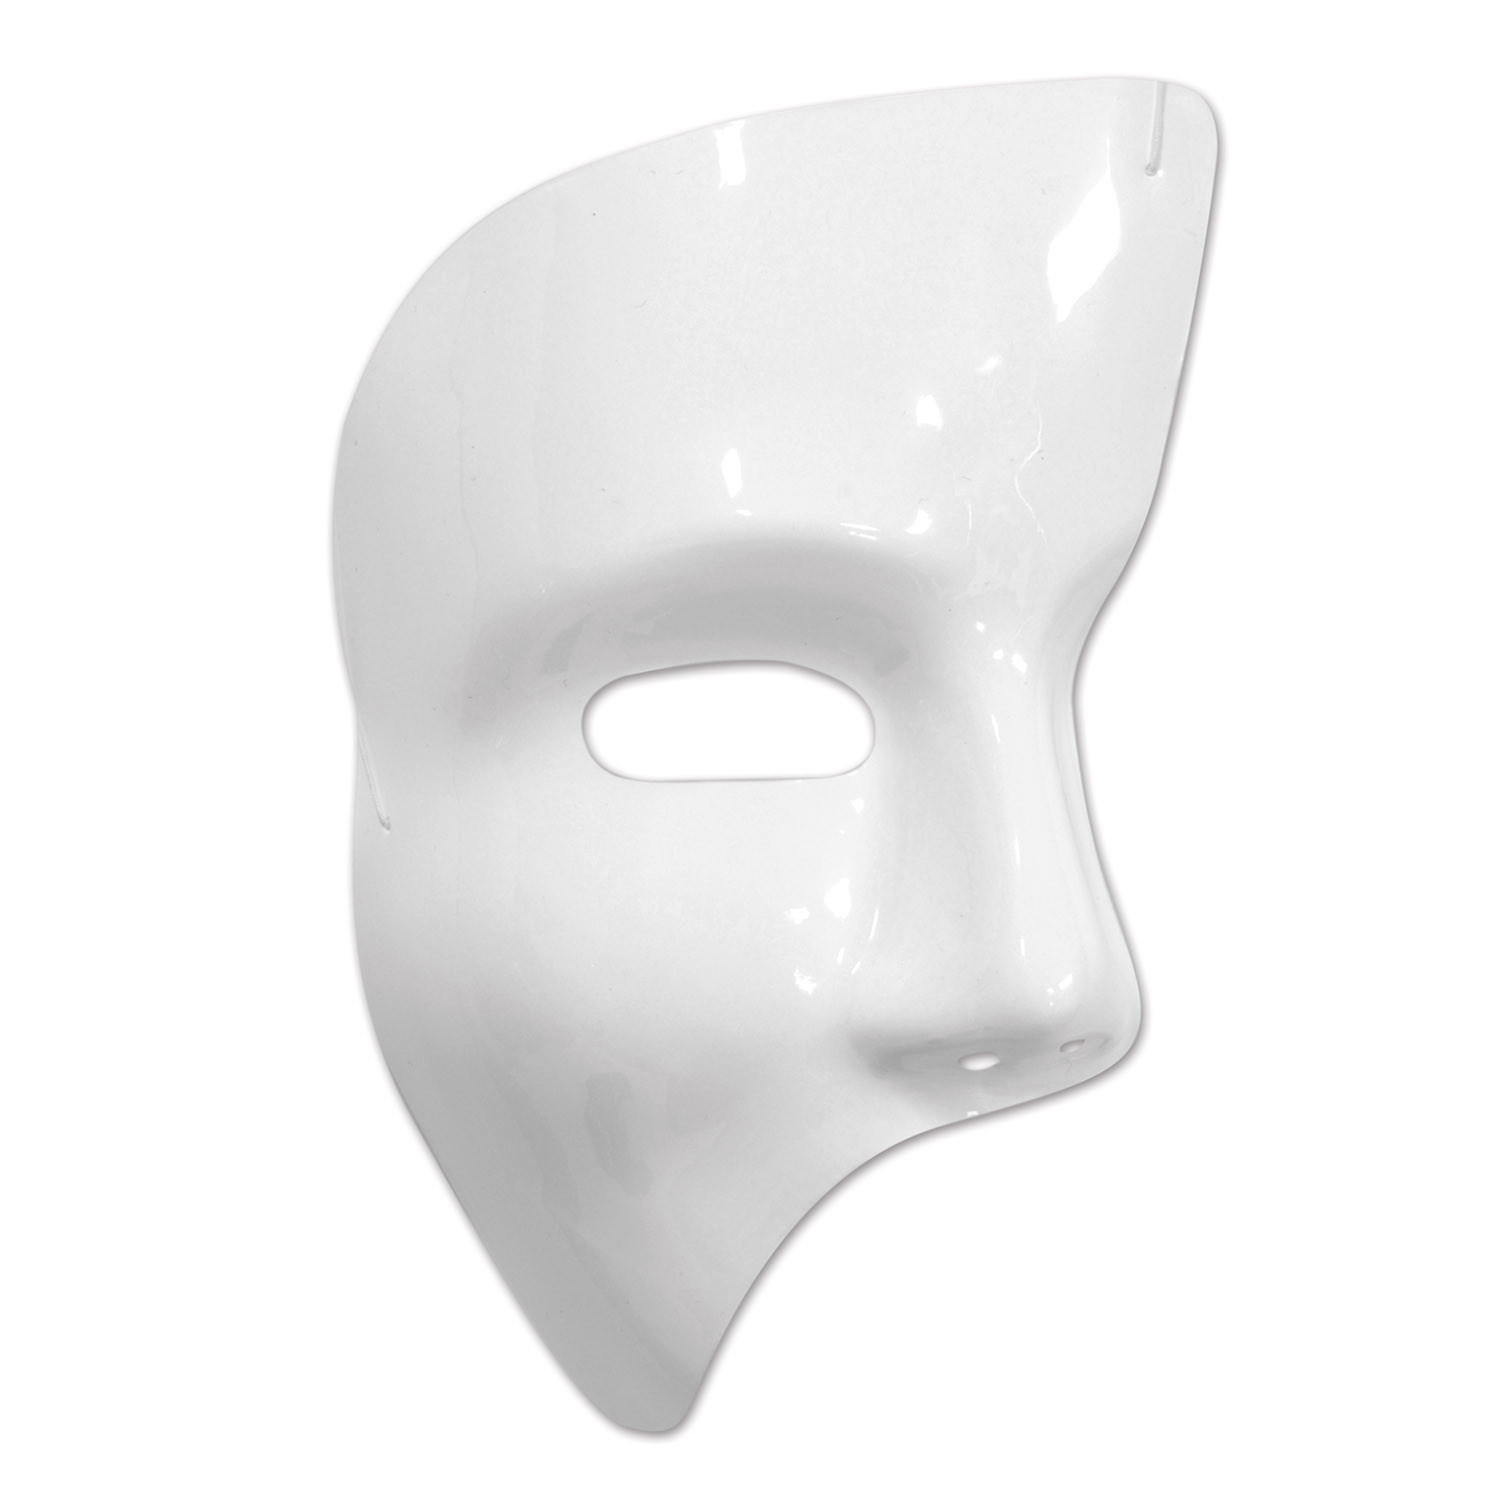 Plastic white phantom mask for the right side of the face.